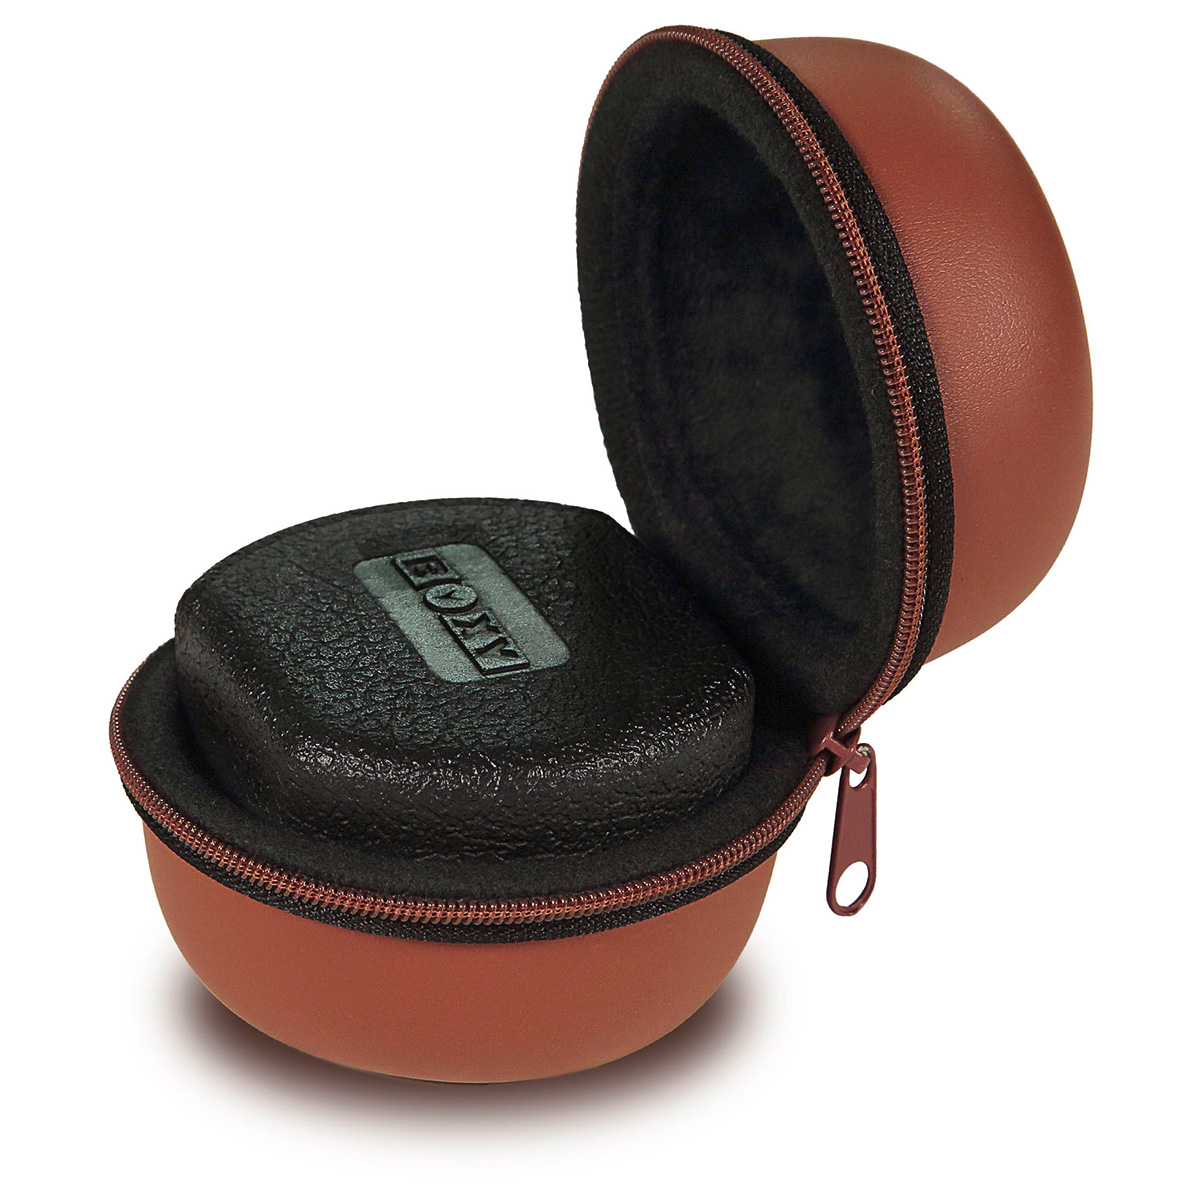 Boxy Watch Box, leather imitation, brown, round